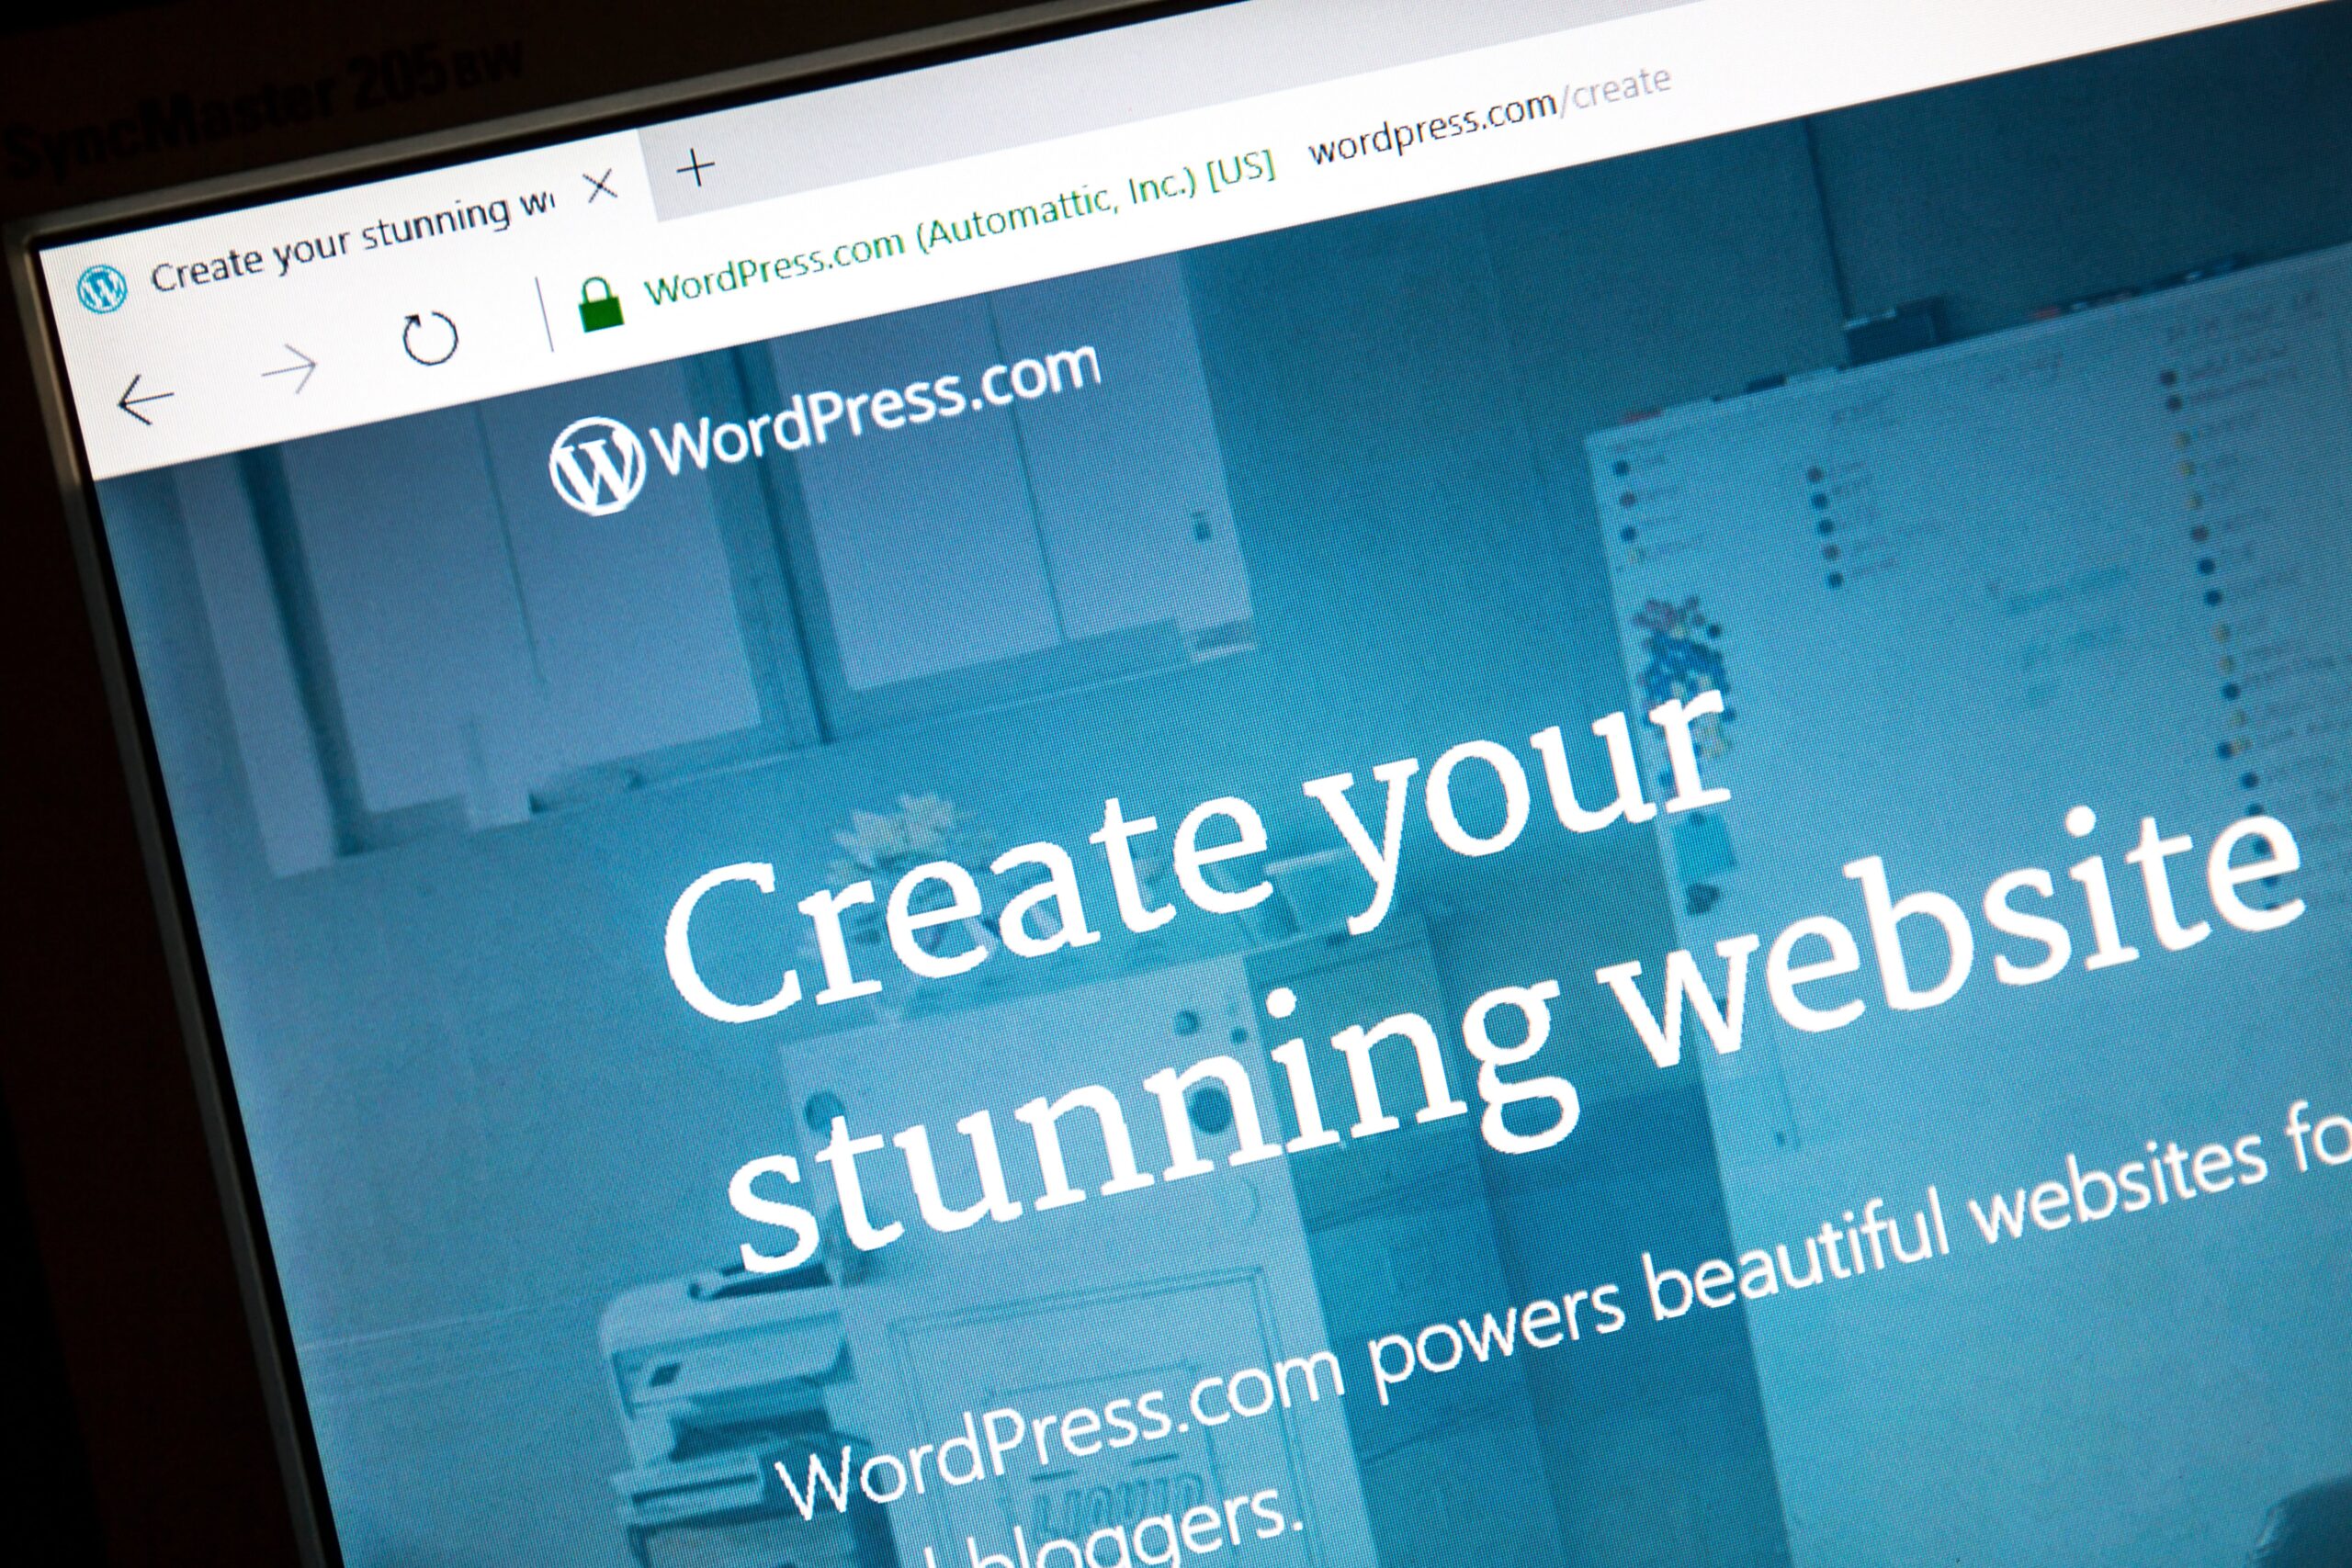 wordpress development agency land new clients